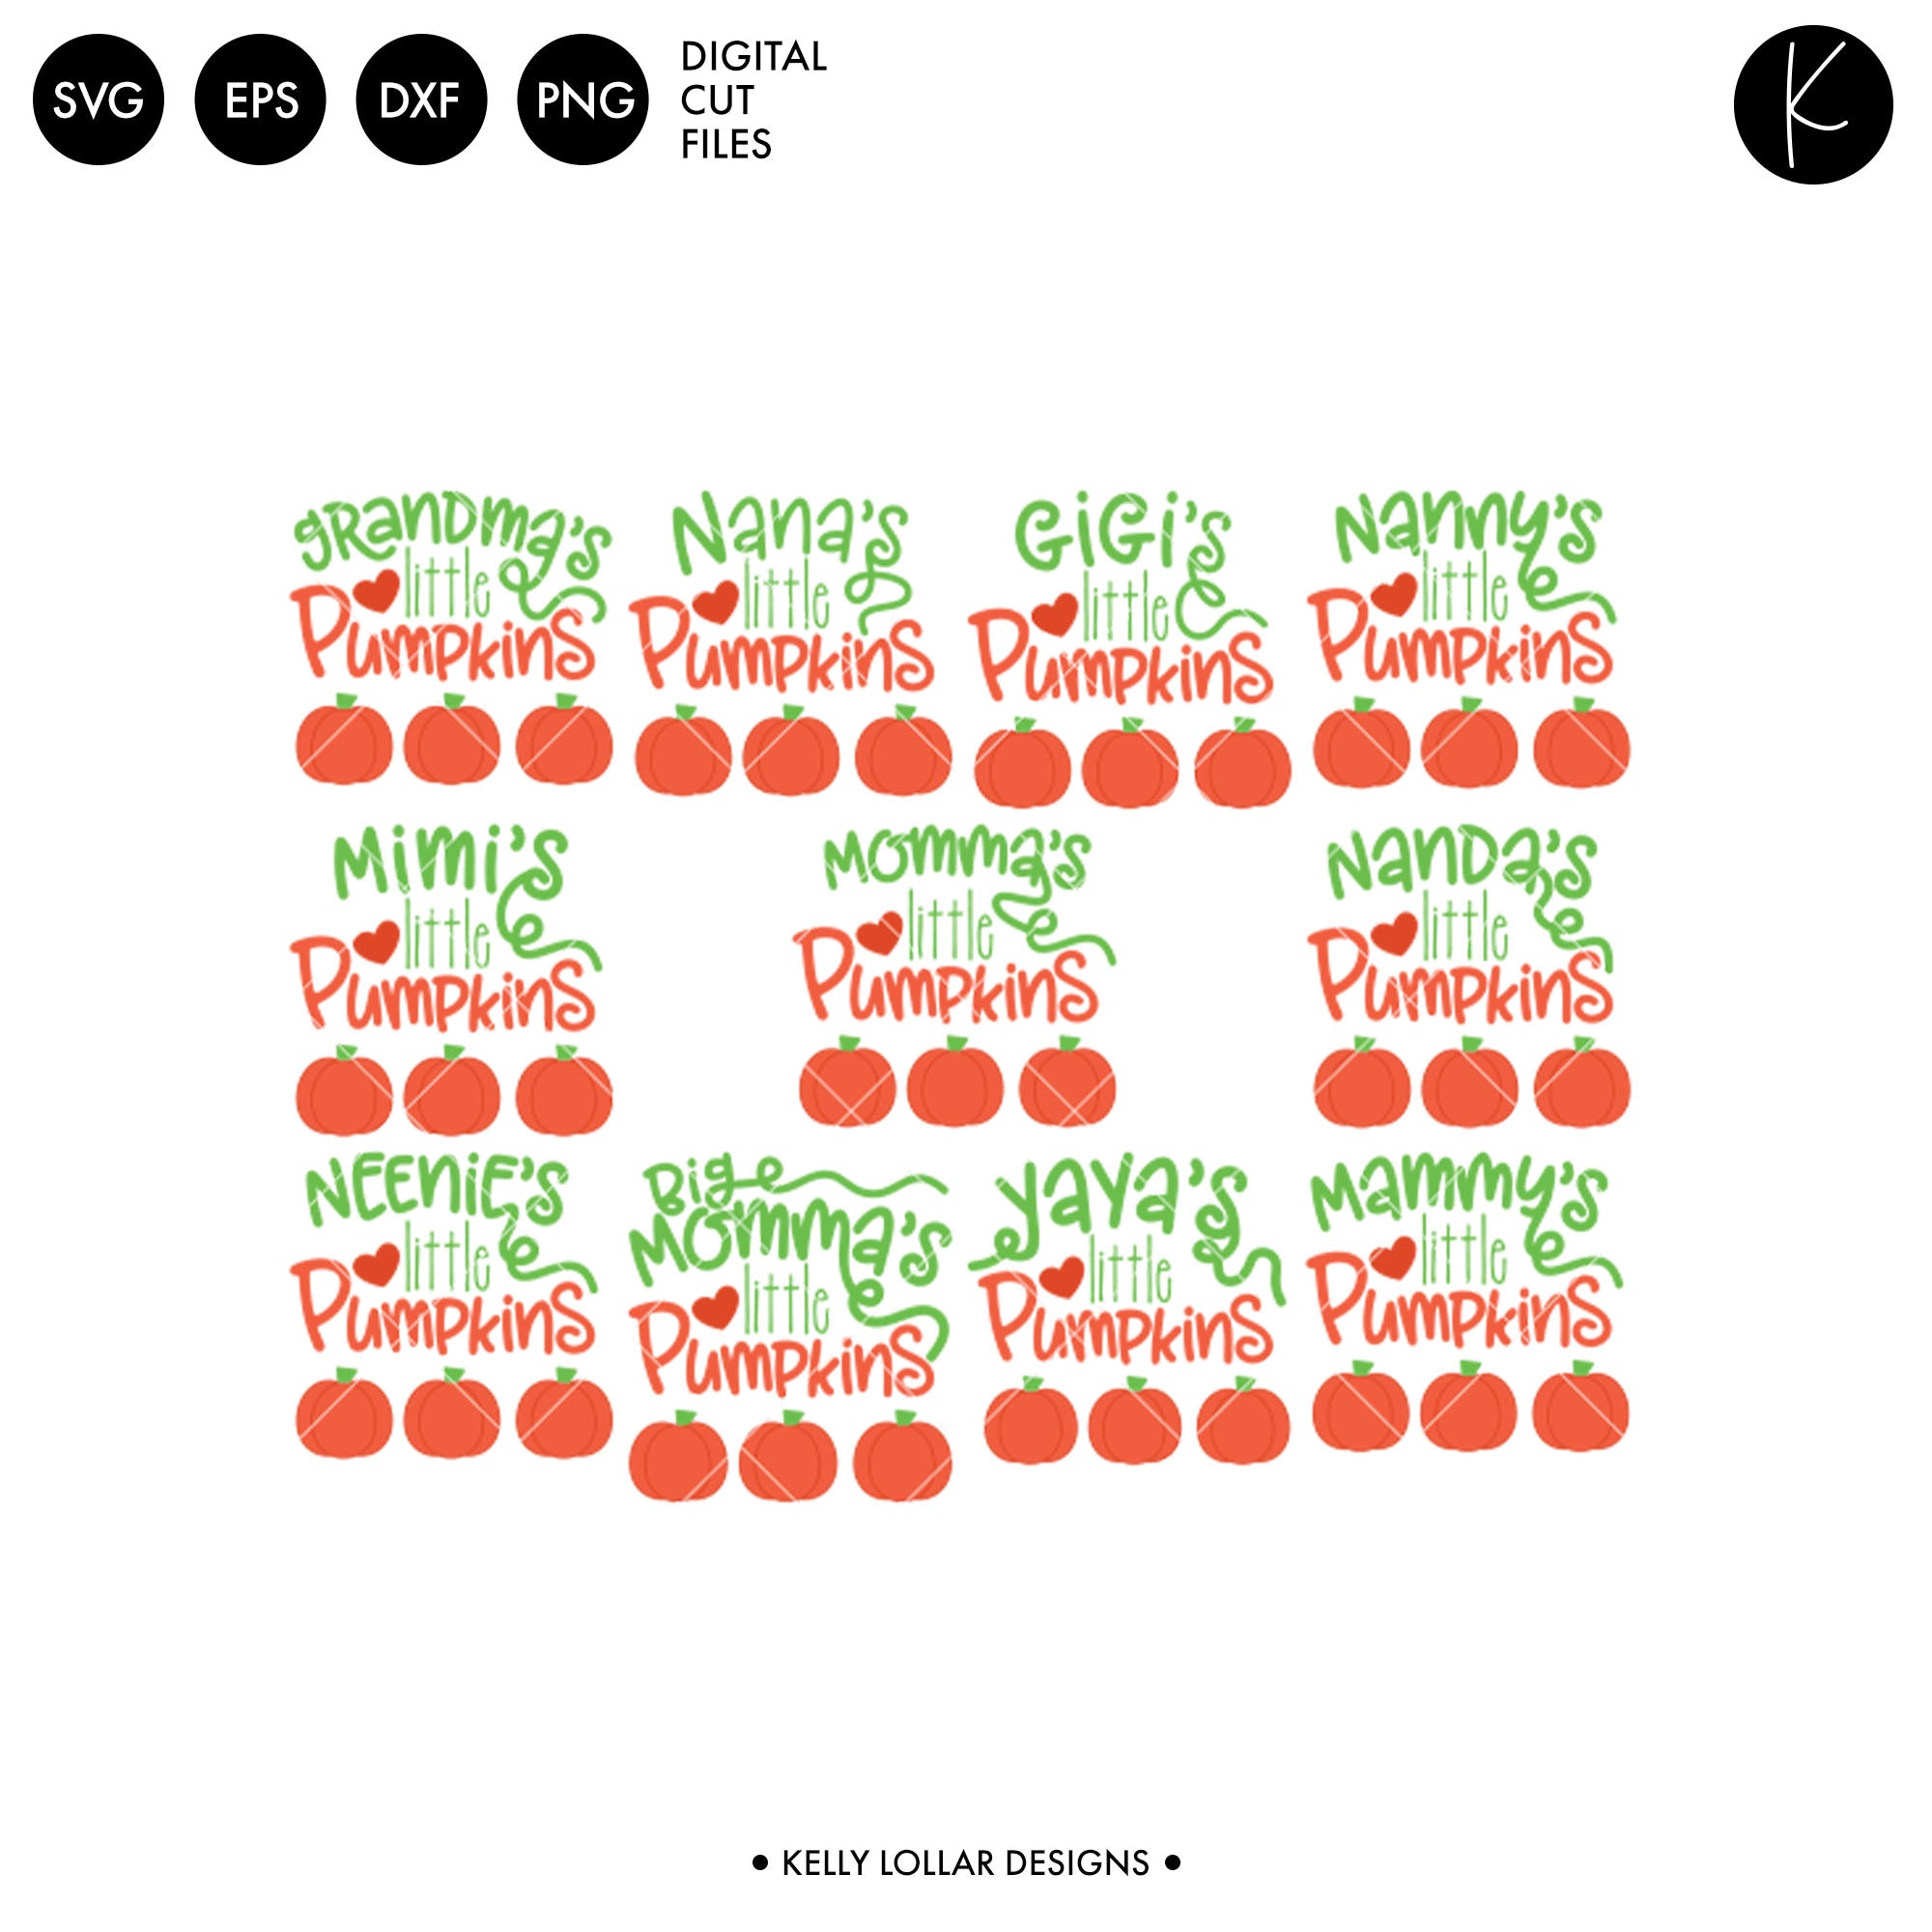 Grandma's Little Pumpkins | SVG DXF EPS PNG Cut Files